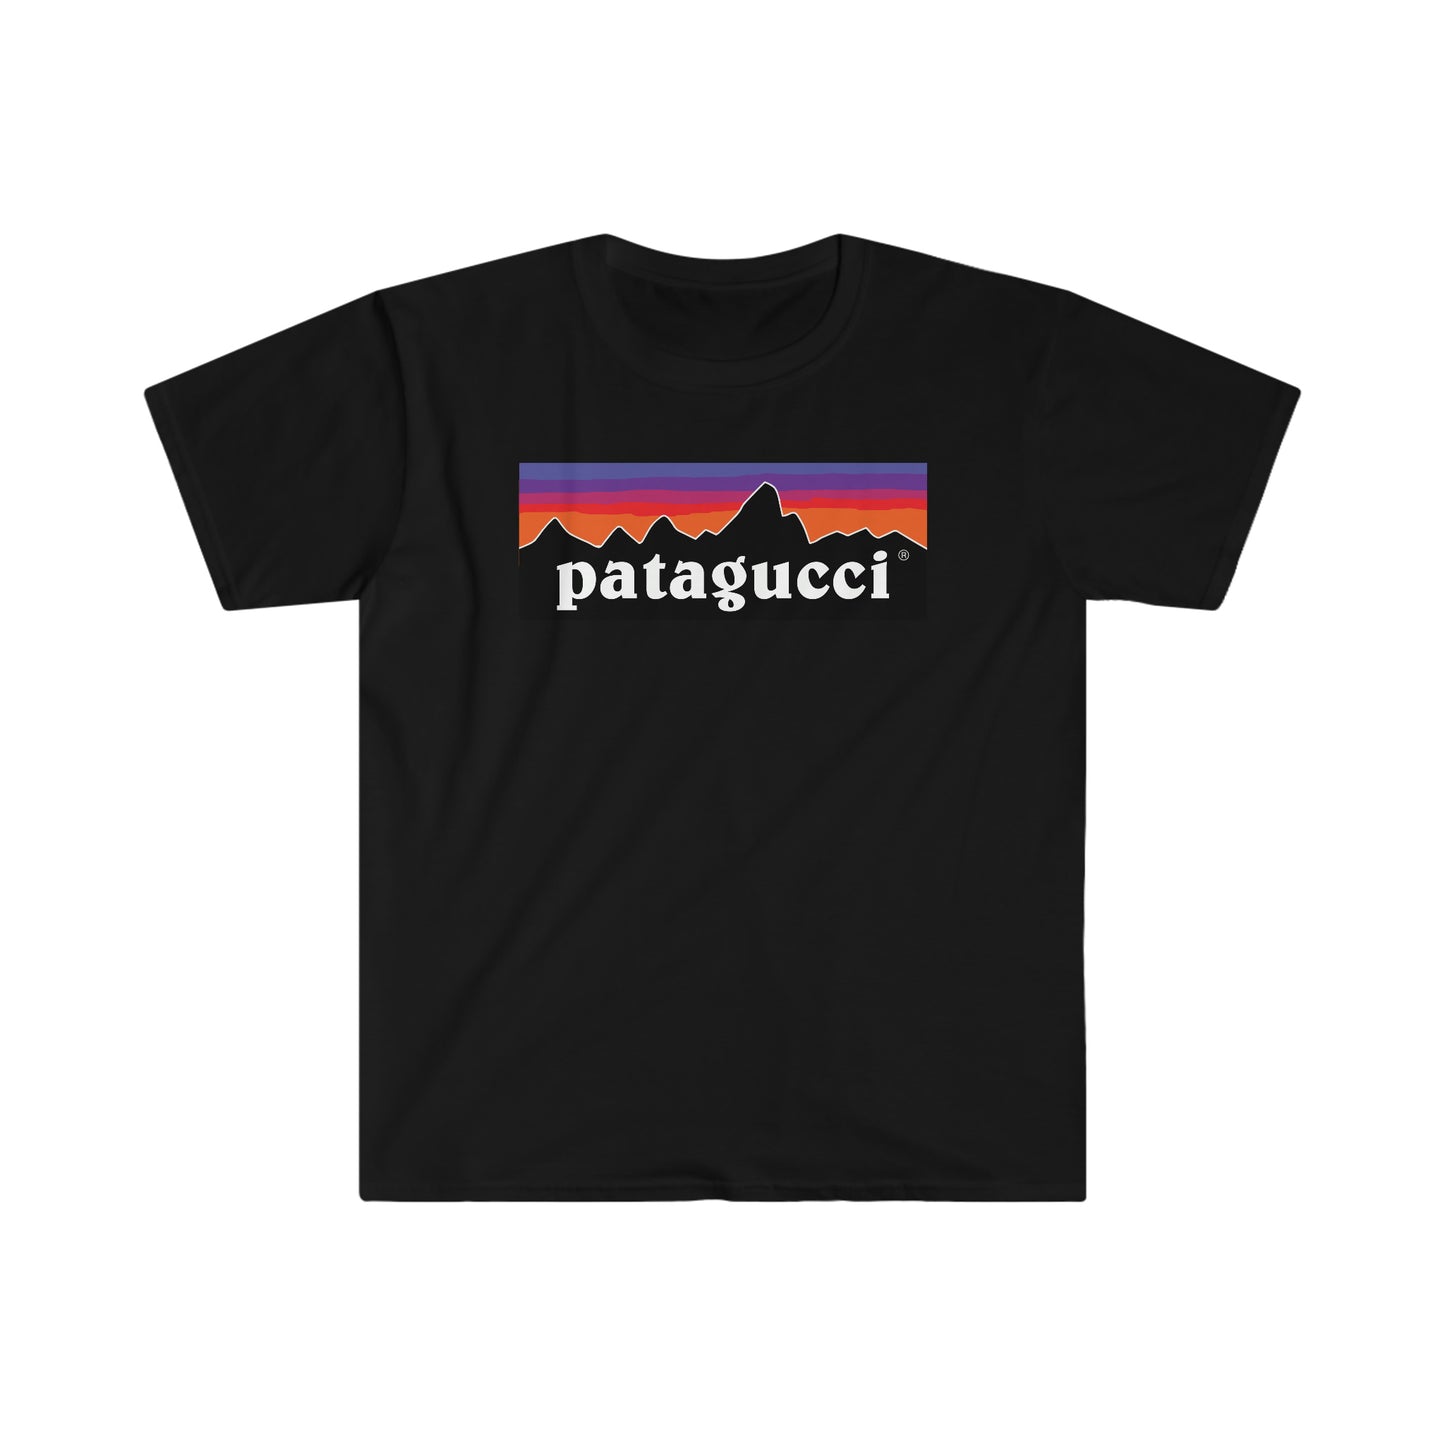 Patagucci Unisex Softstyle T-Shirt